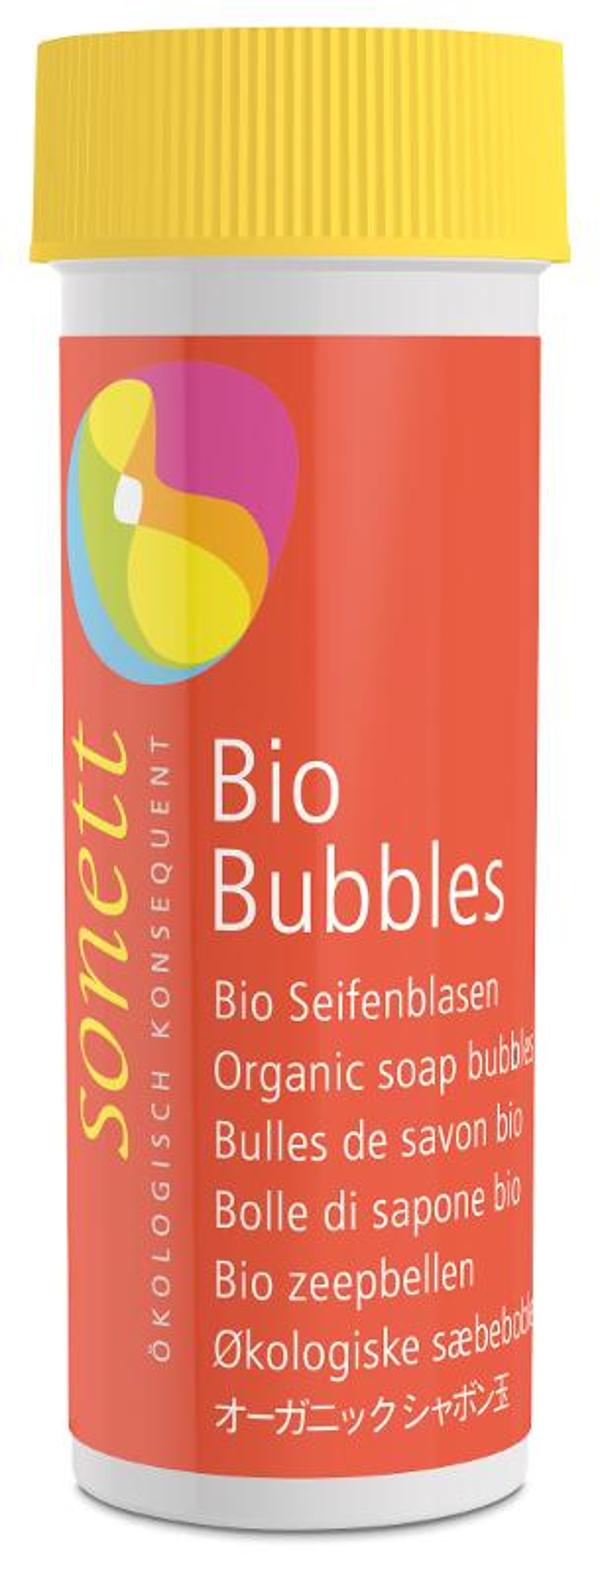 Produktfoto zu Bubbles Seifenblasen 45ml Sonett